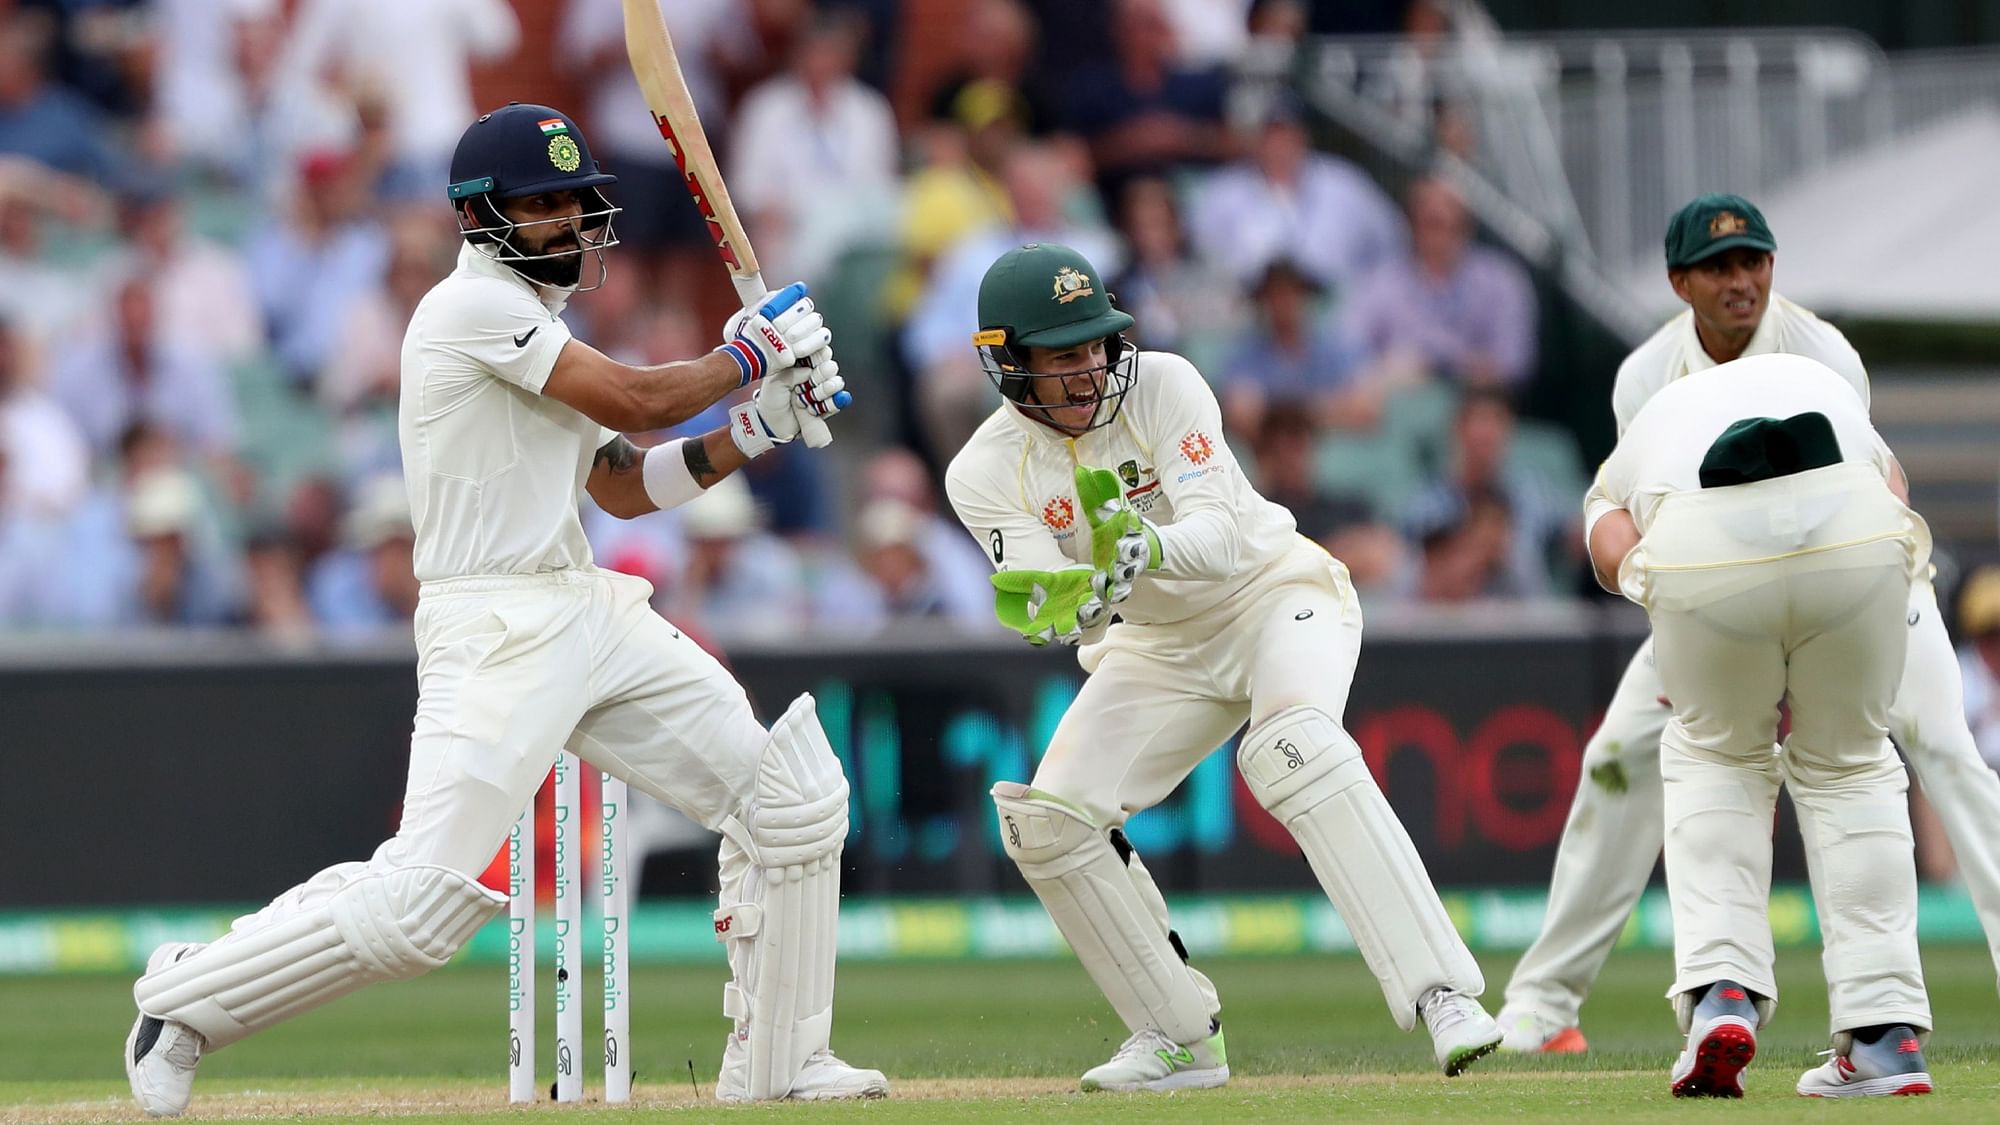 Virat Kohli scored 34 as India finished Day 3 of the Adelaide Test holding a 166-run lead over Australia.